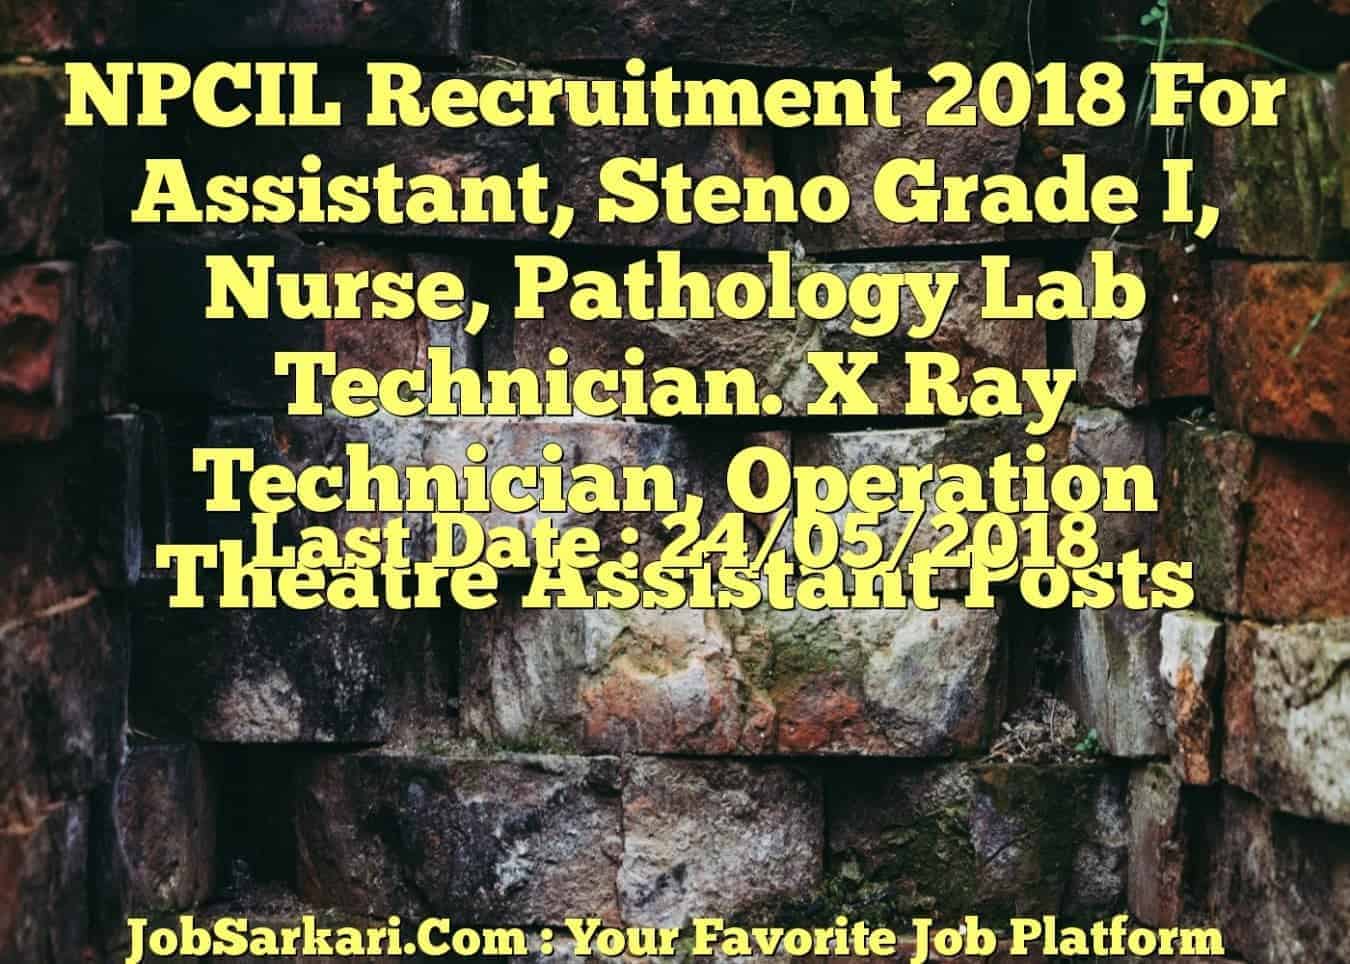 NPCIL Recruitment 2018 For Assistant, Steno Grade I, Nurse, Pathology Lab Technician. X Ray Technician, Operation Theatre Assistant Posts